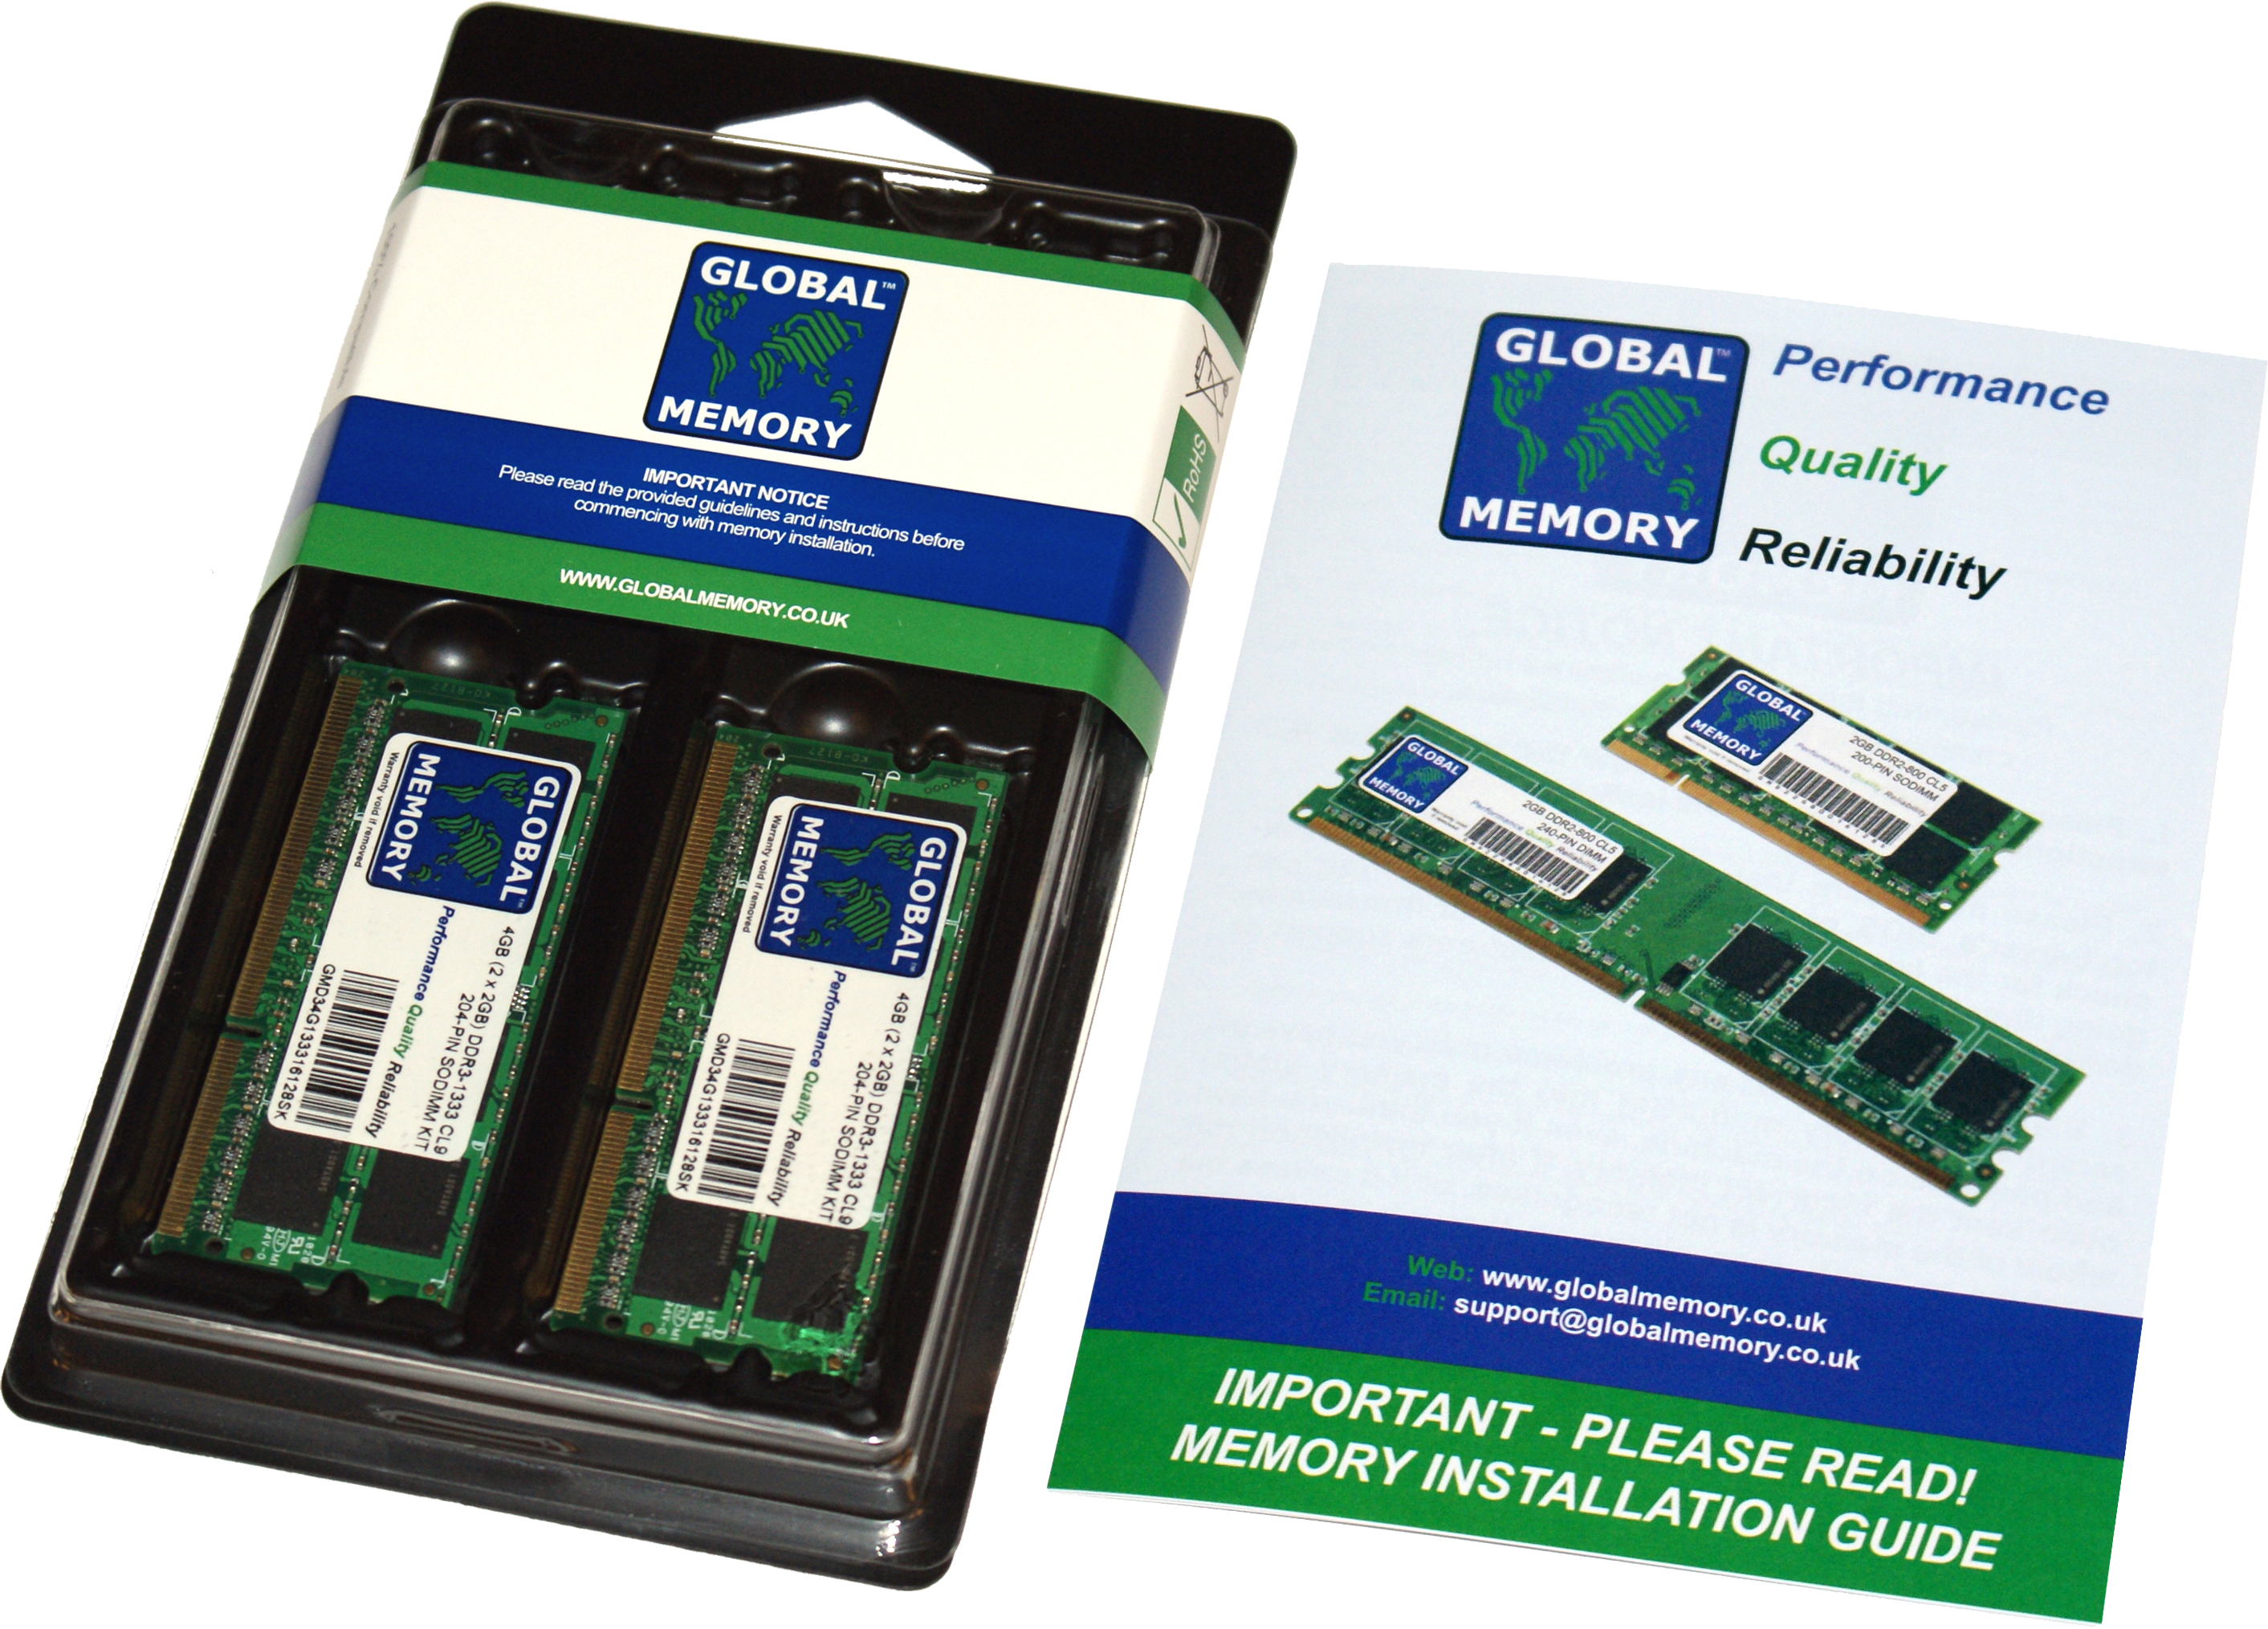 8GB (2 x 4GB) DDR3 1866MHz PC3-14900 204-PIN SODIMM MEMORY RAM KIT FOR DELL LAPTOPS/NOTEBOOKS